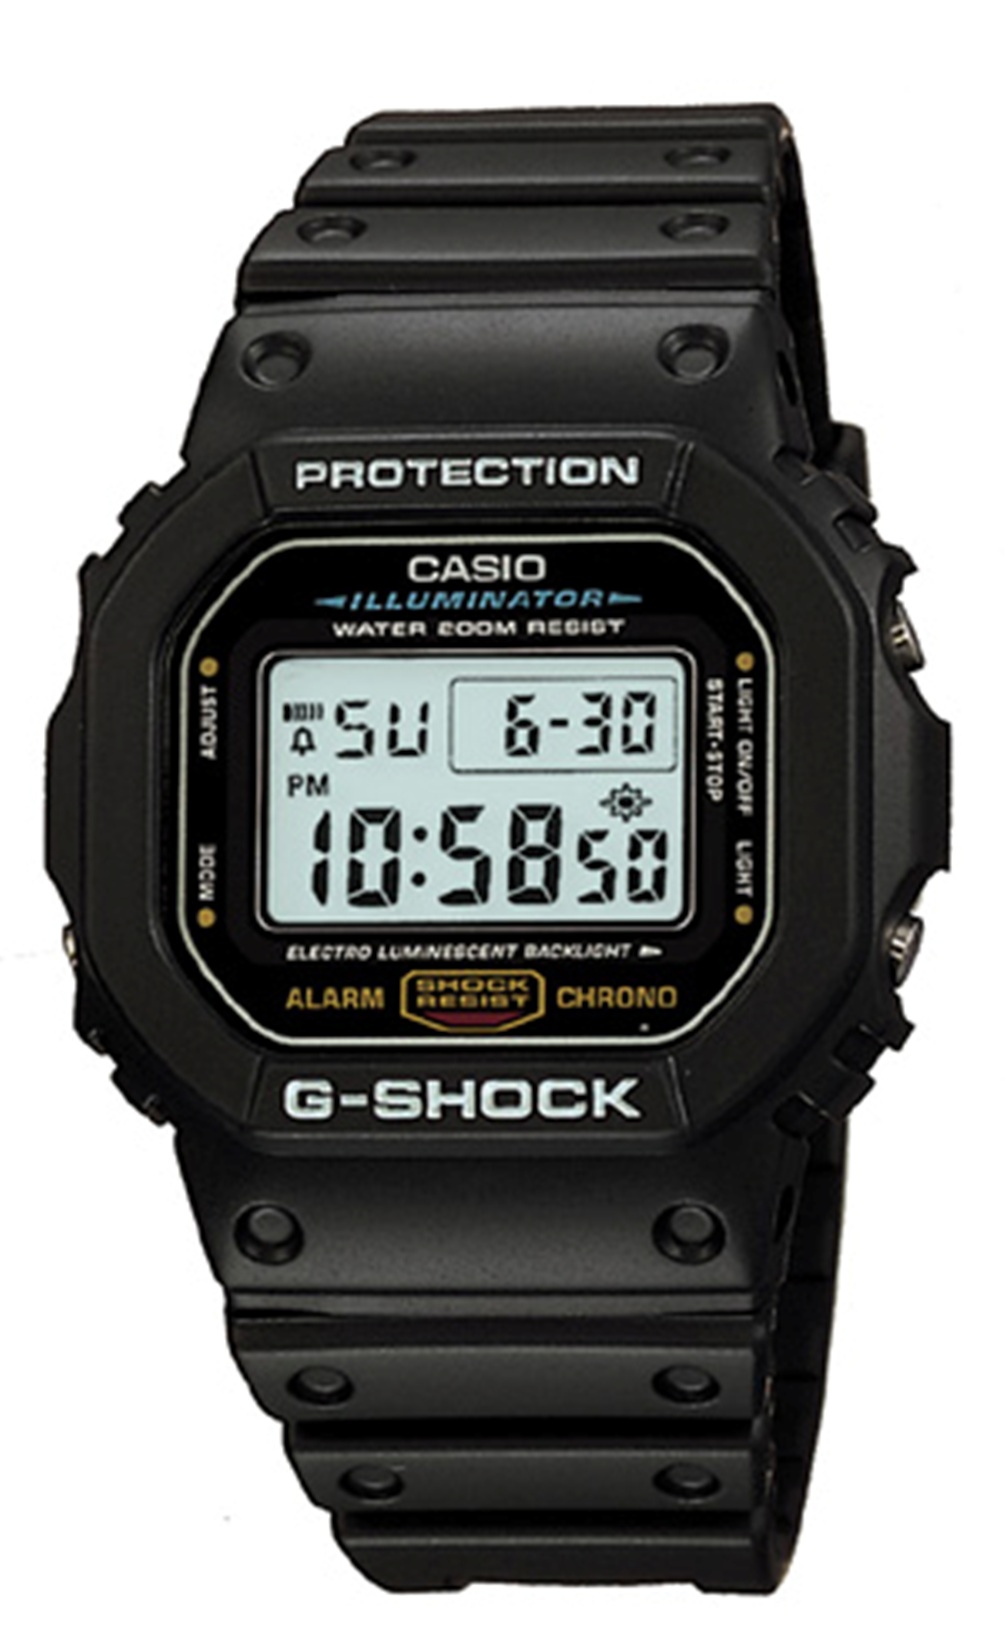 SEE SEE‪ GSHOCK DW5600 腕時計(デジタル) | challengesnews.com‬